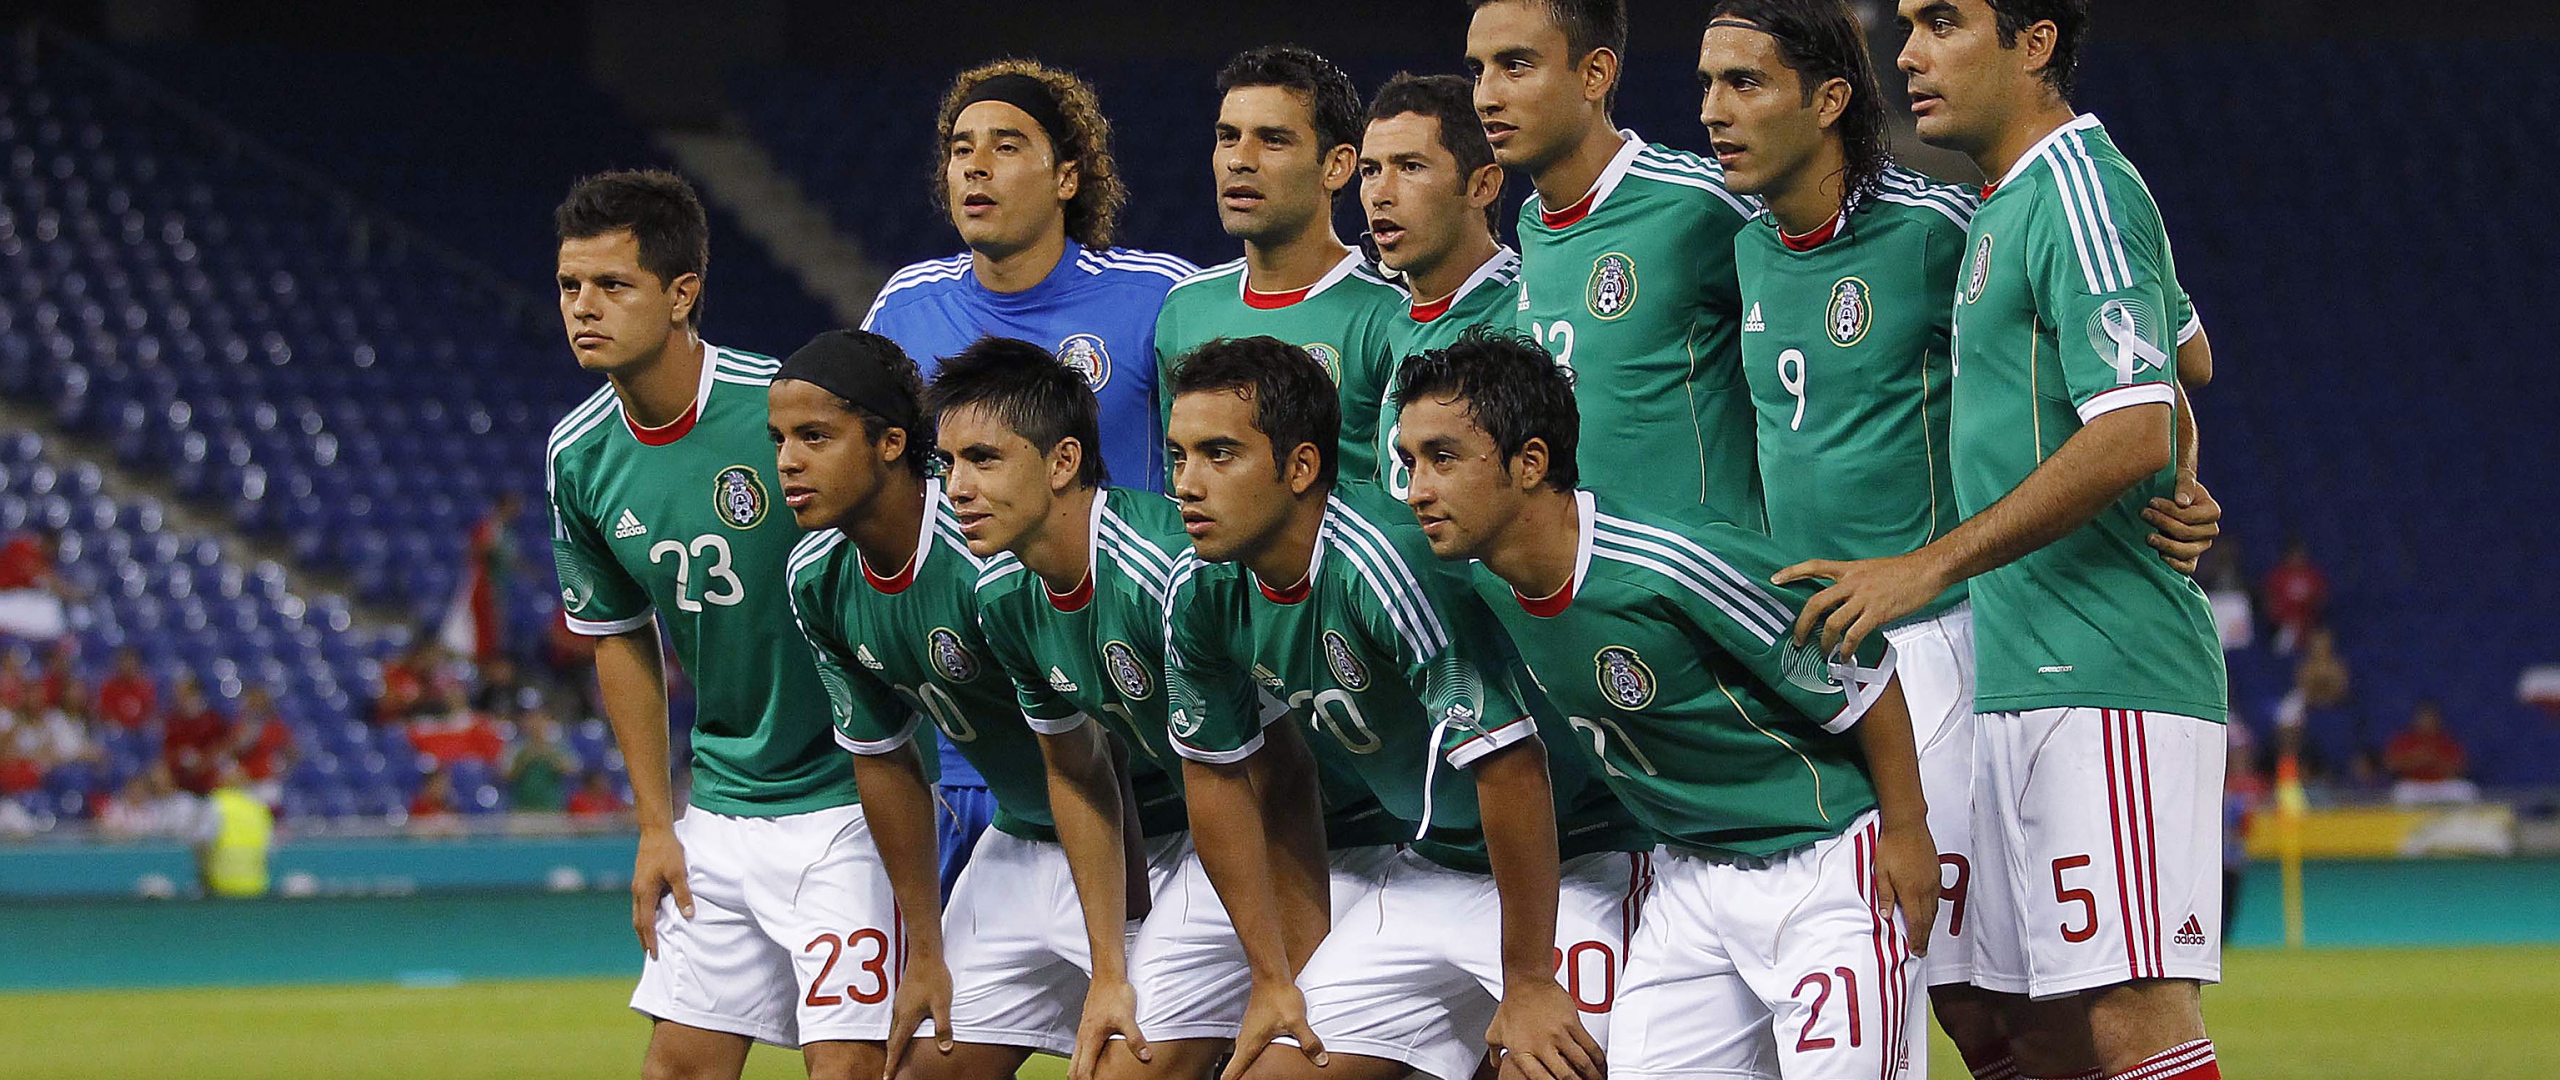 Download Wallpaper 2560x1080 Mexico vs chile, Football, 2015